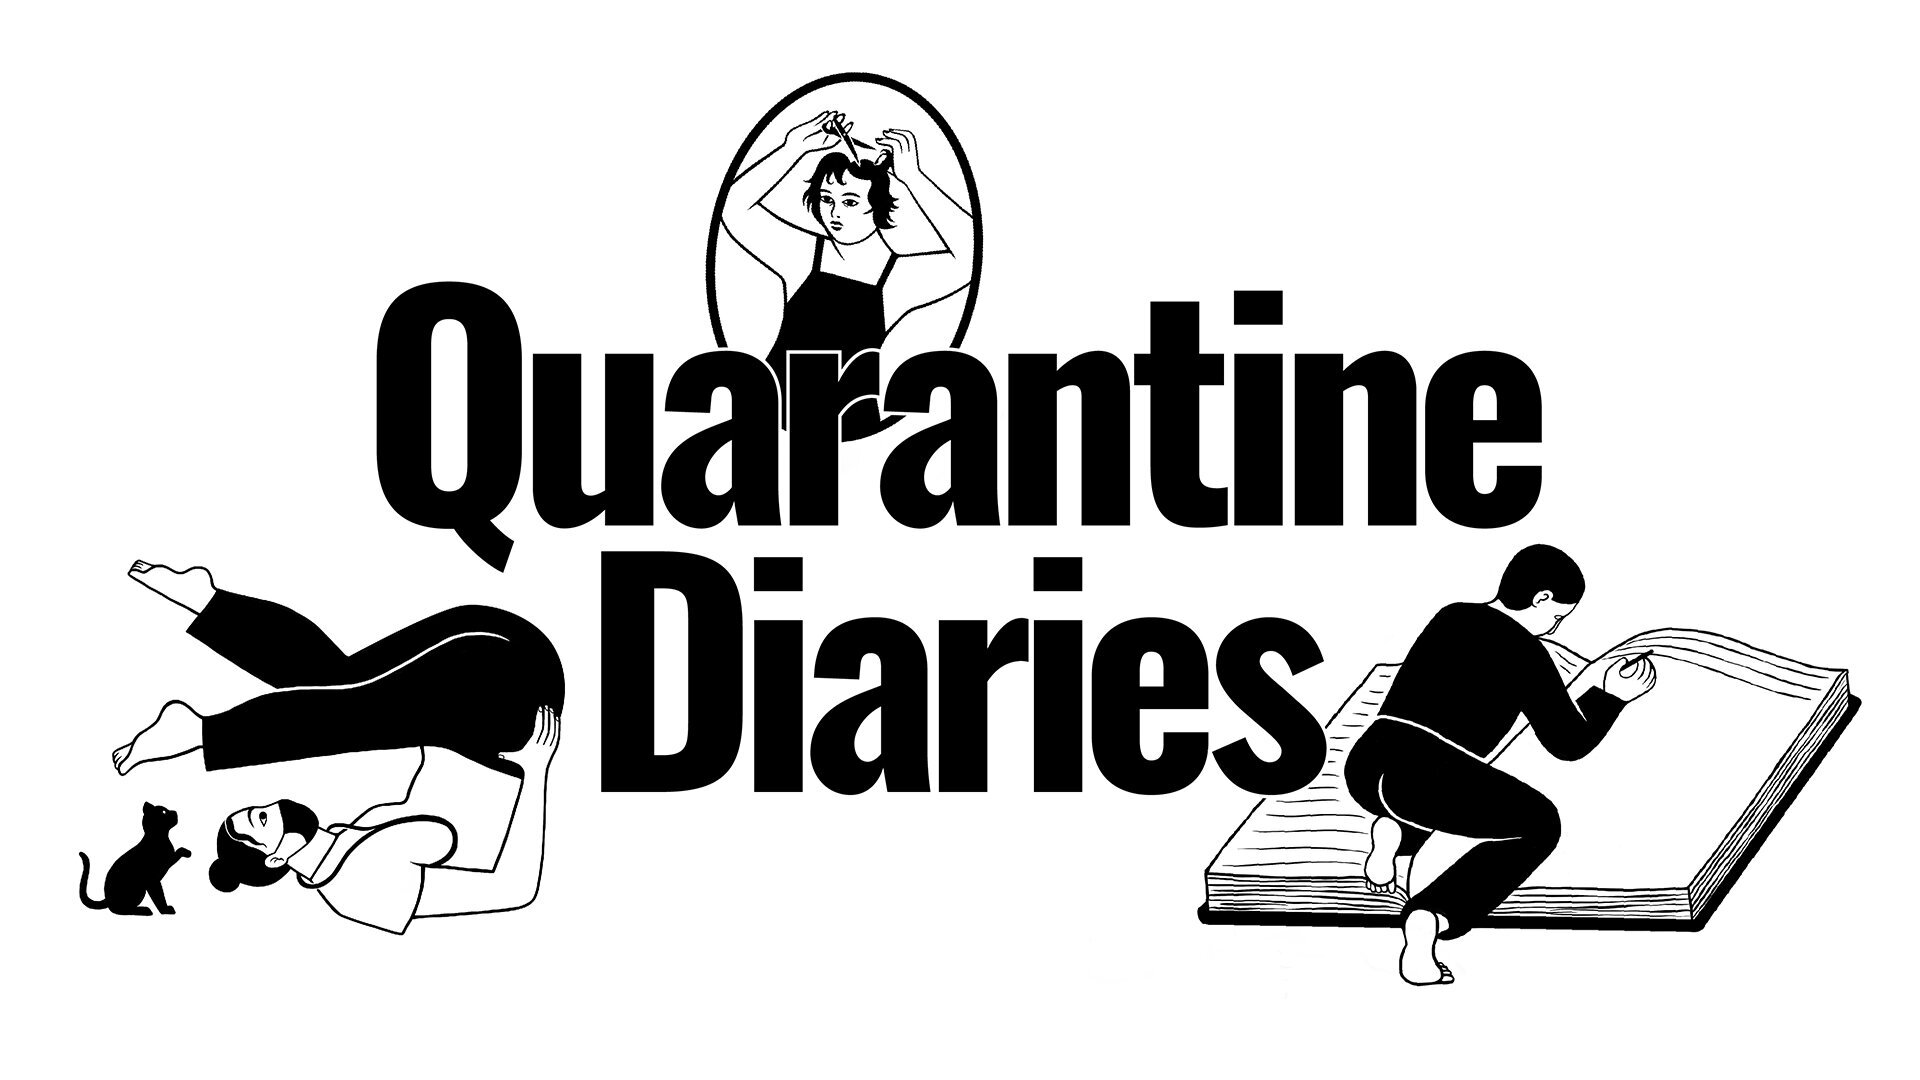 the quarantine princess diaries